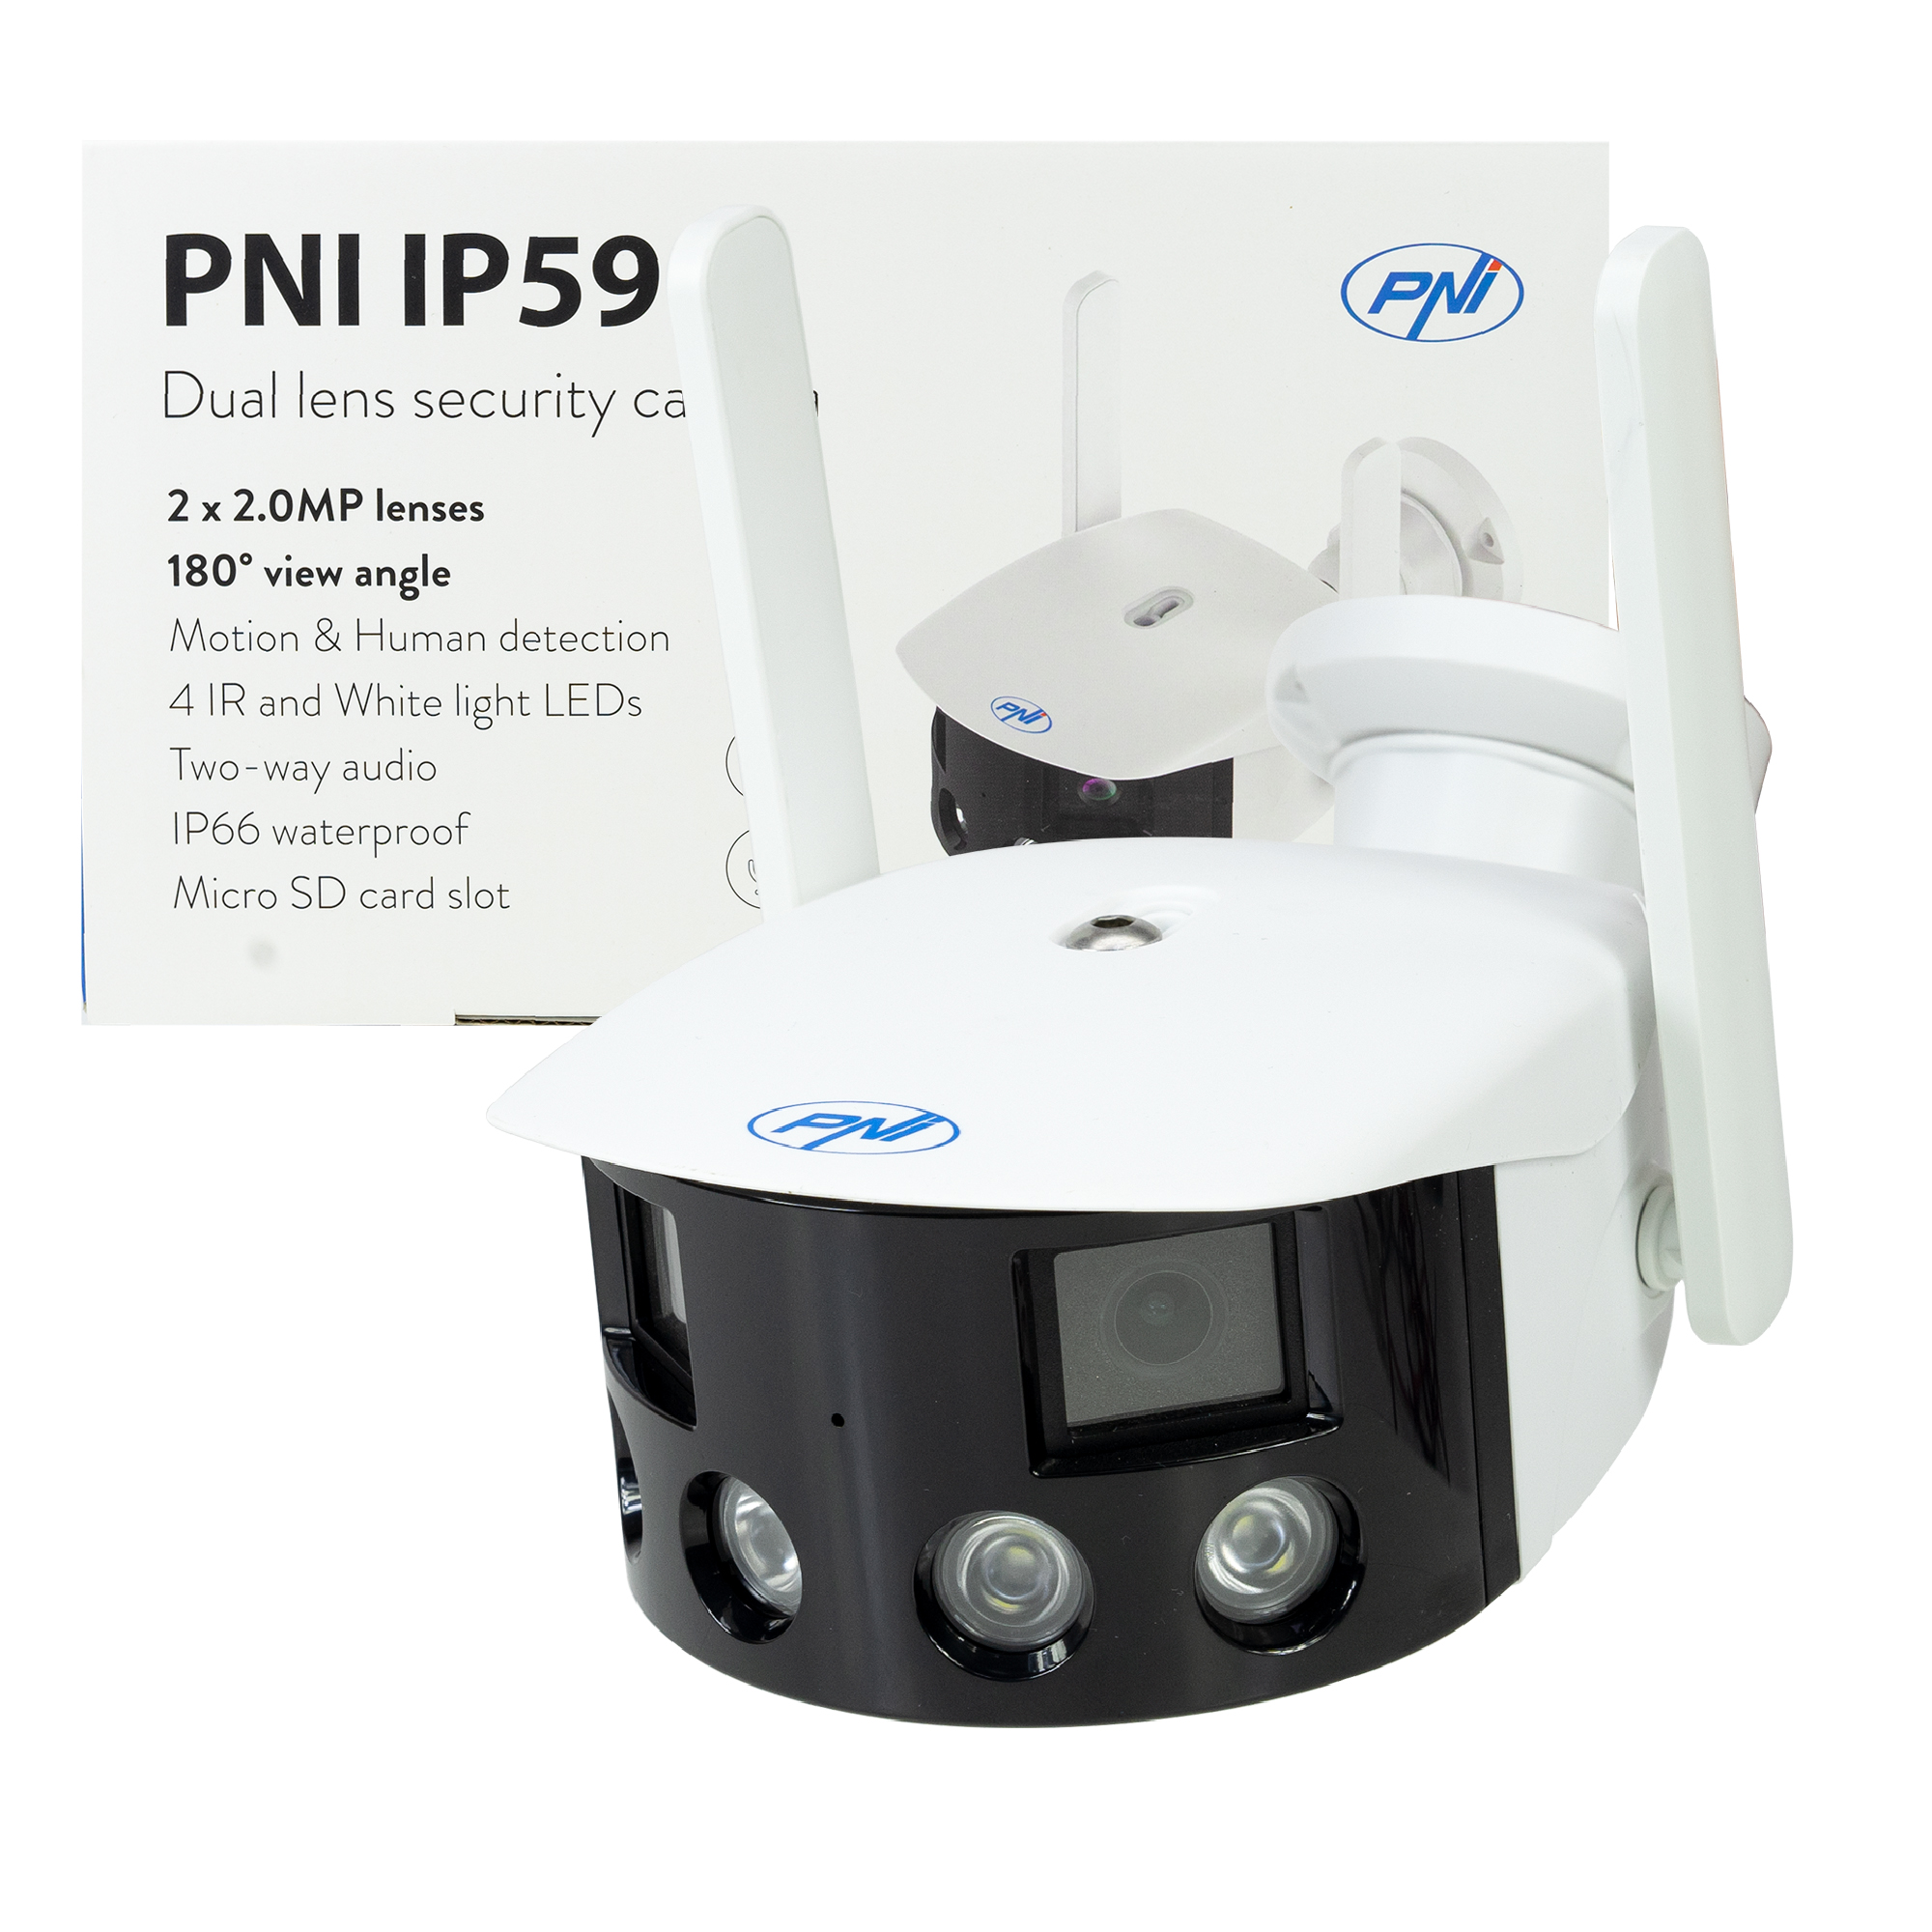 Camera supraveghere dubla PNI IP590, wireless, cu IP, Dual lens, 2 x 2MP, acoperire 180 grade